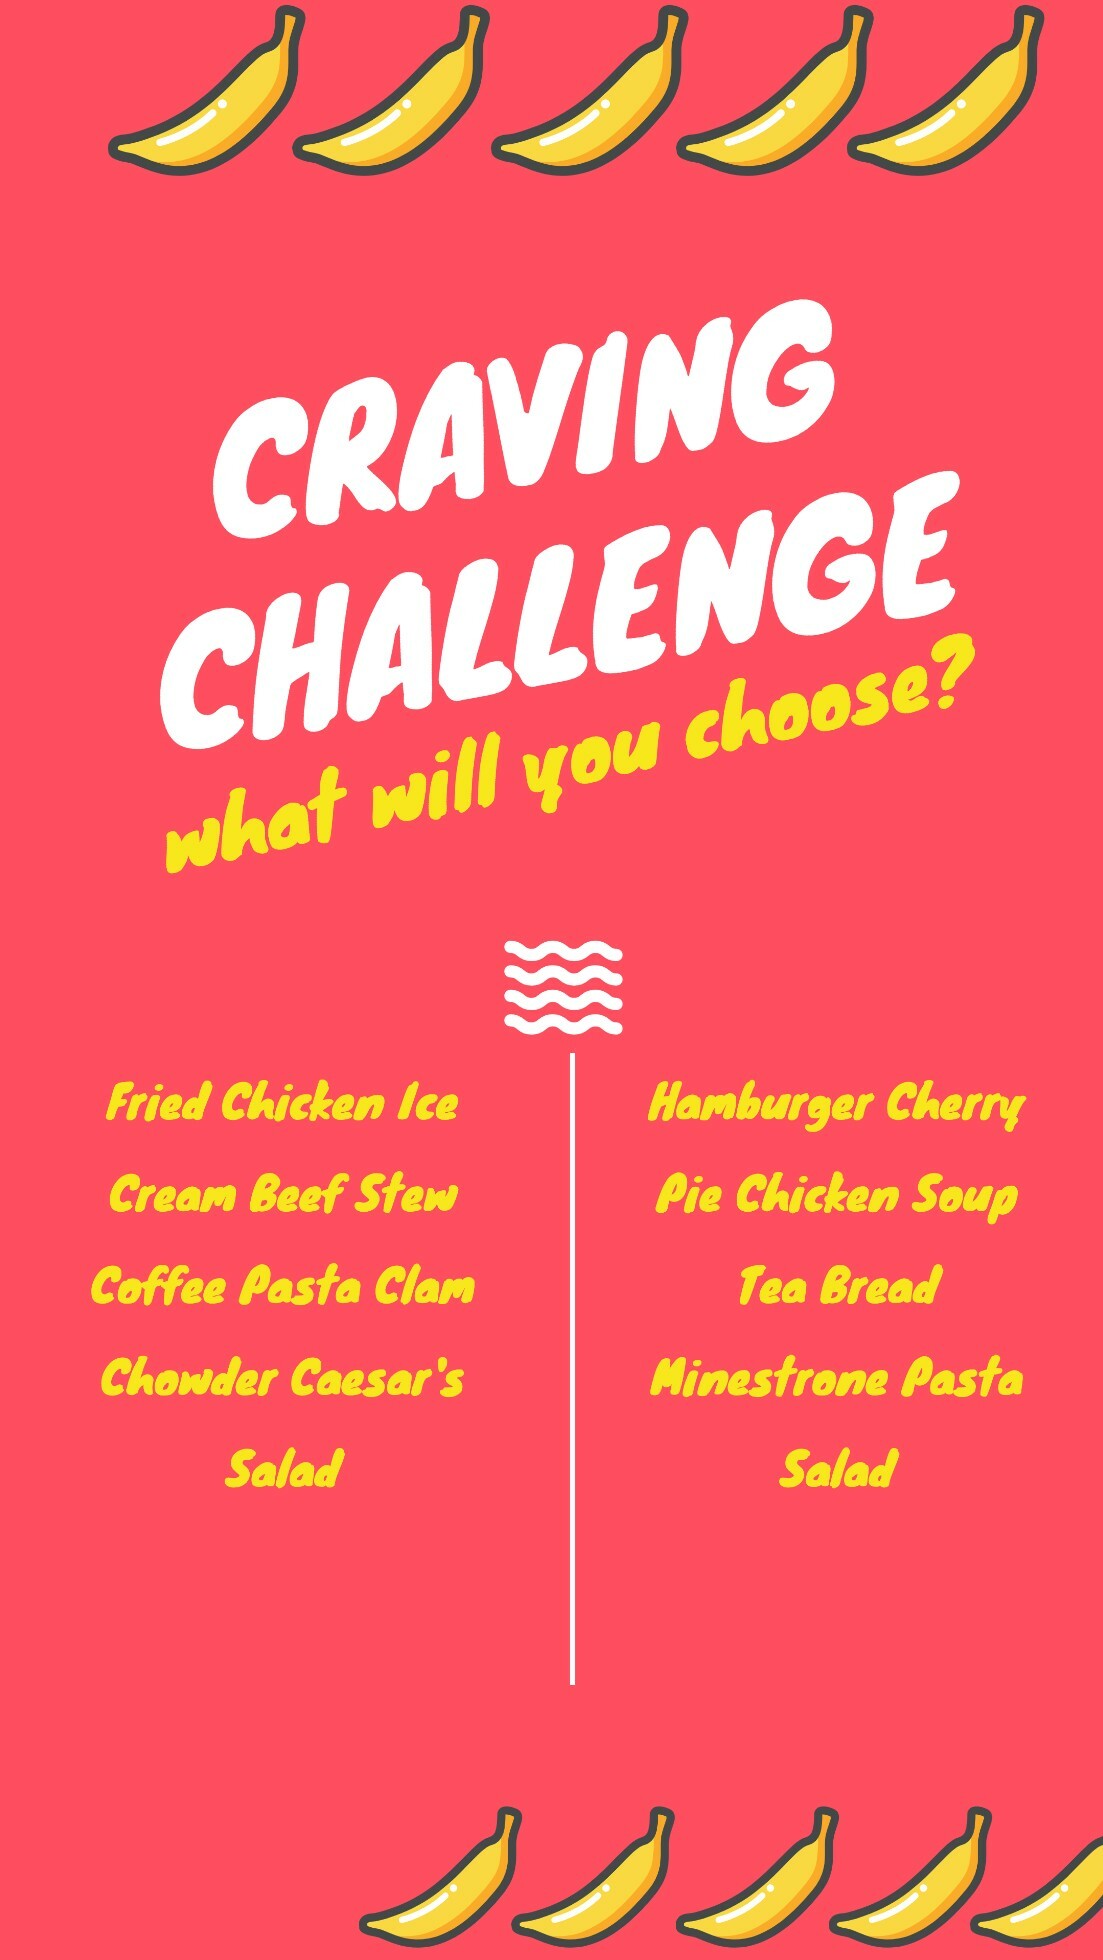 Carving challenge menu template